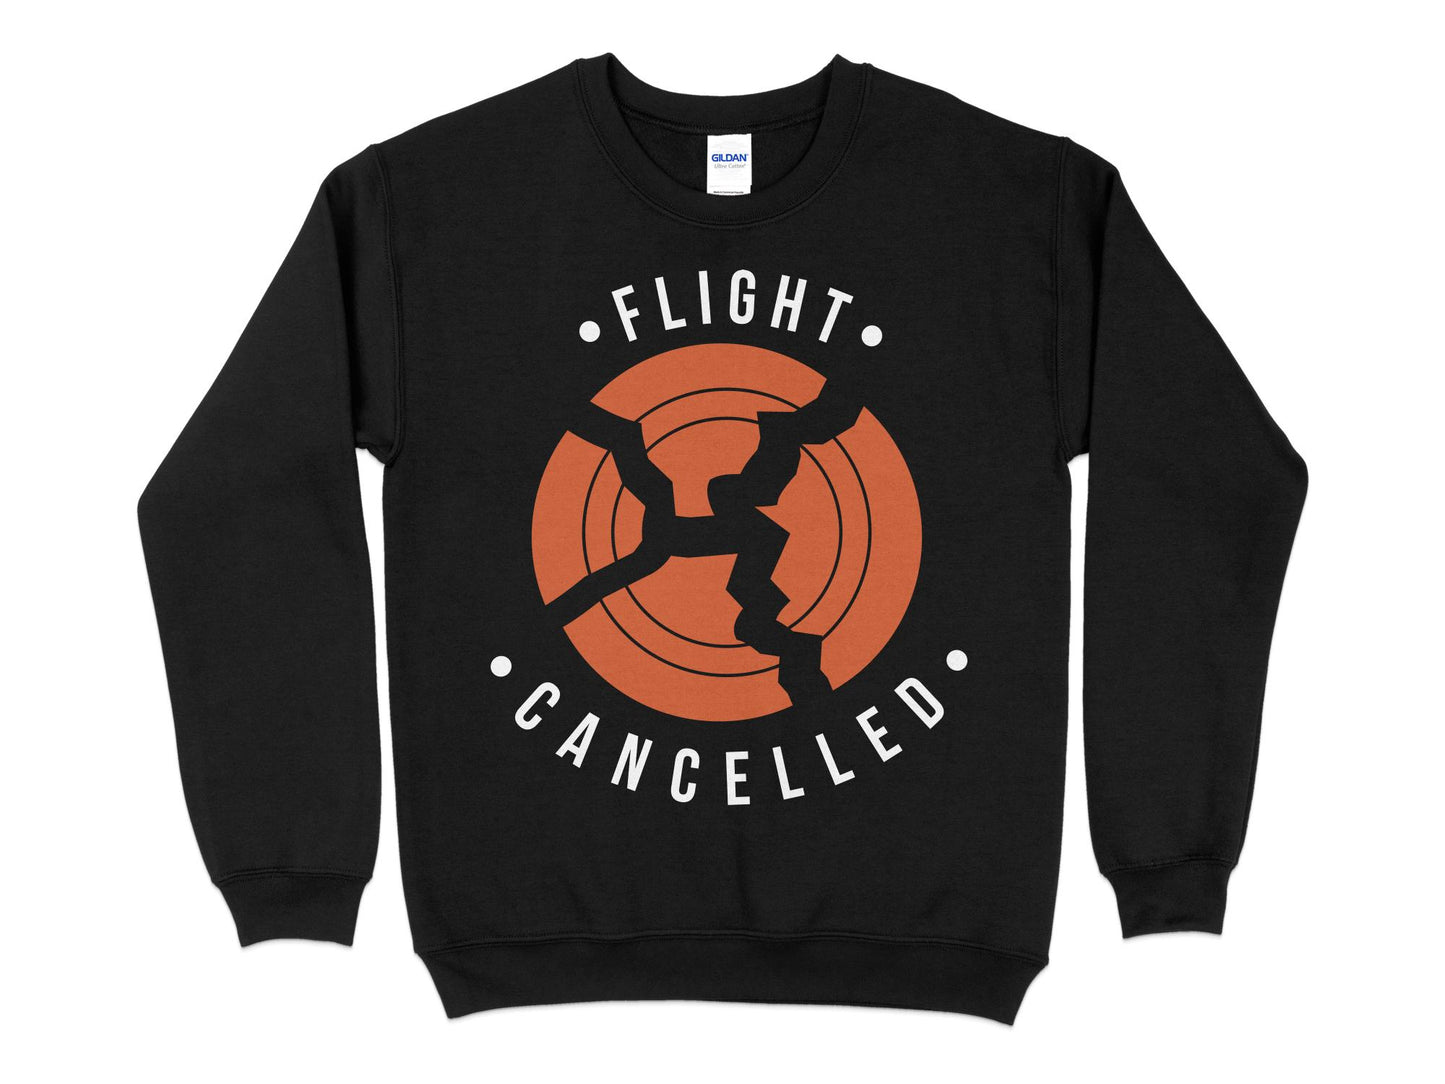 Trap Shooting Sweatshirt - Flight Cancelled, black